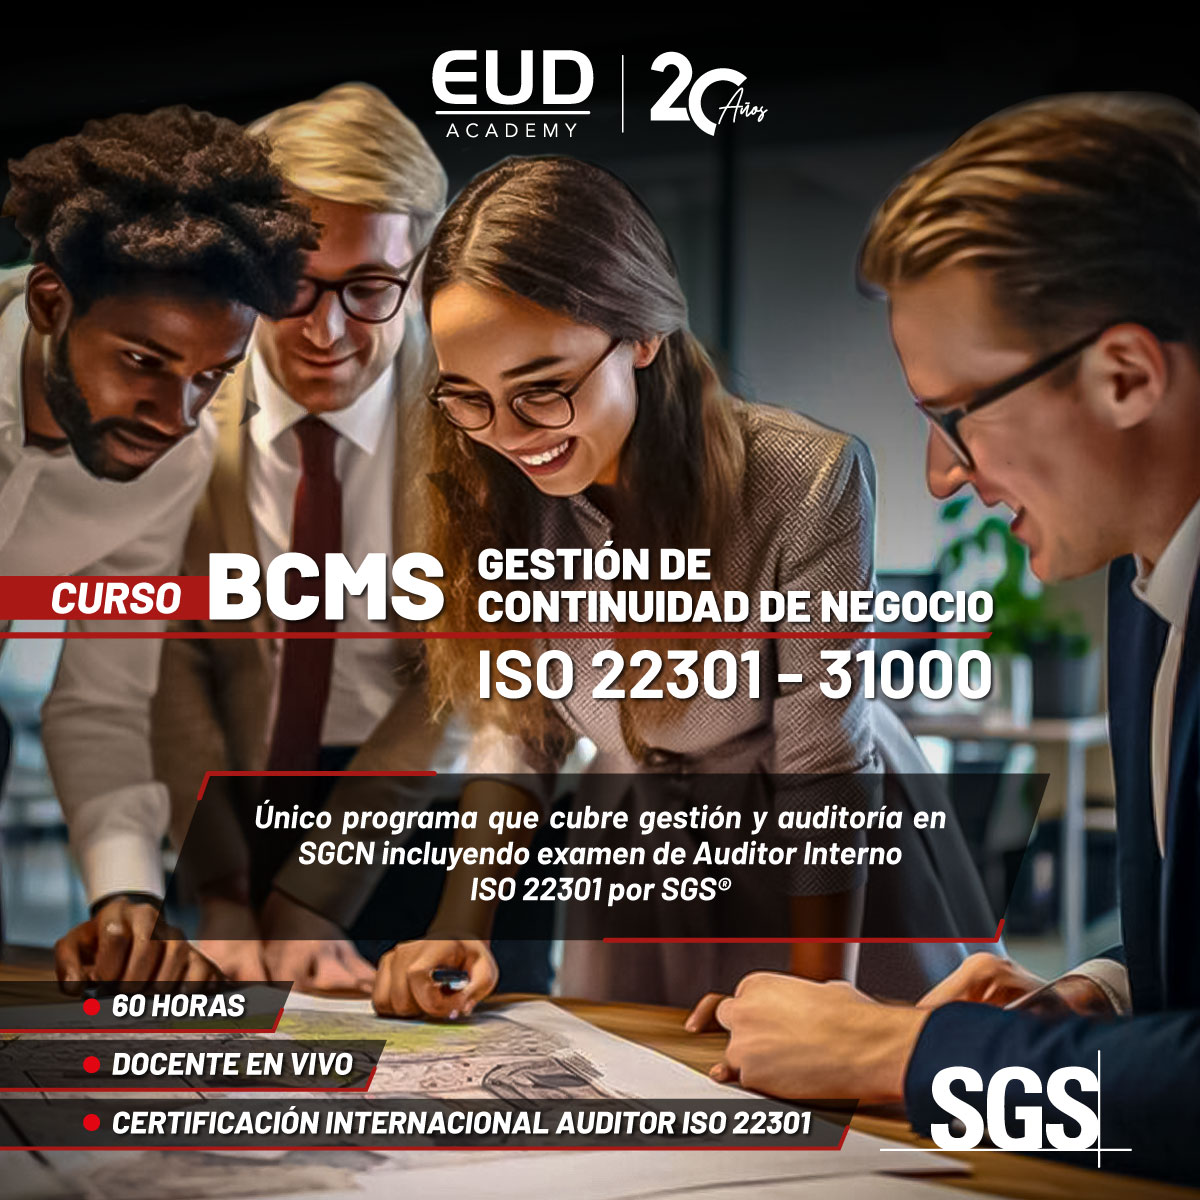 BCMS en EUD Academy